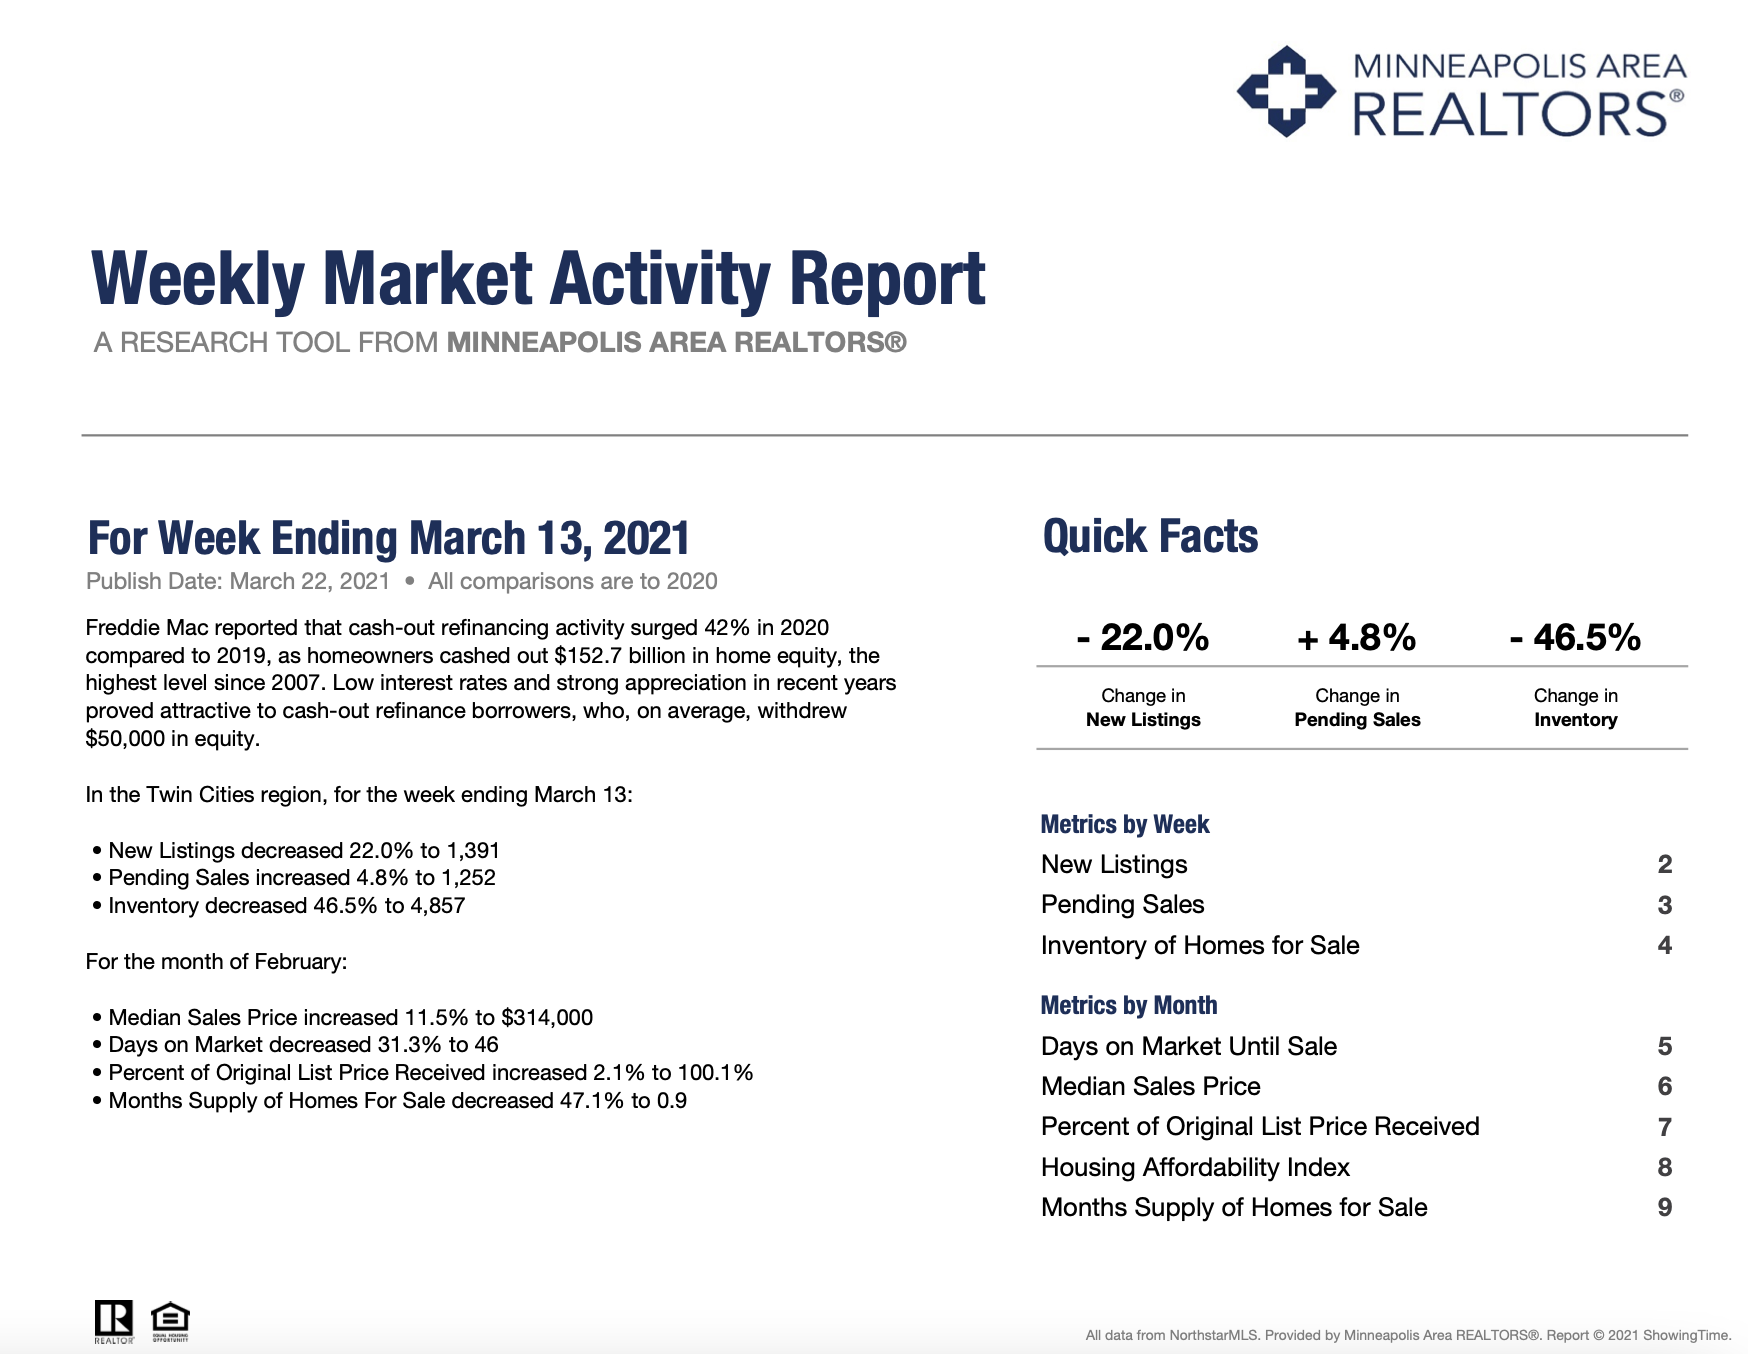 Your Weekly Market Activity Report